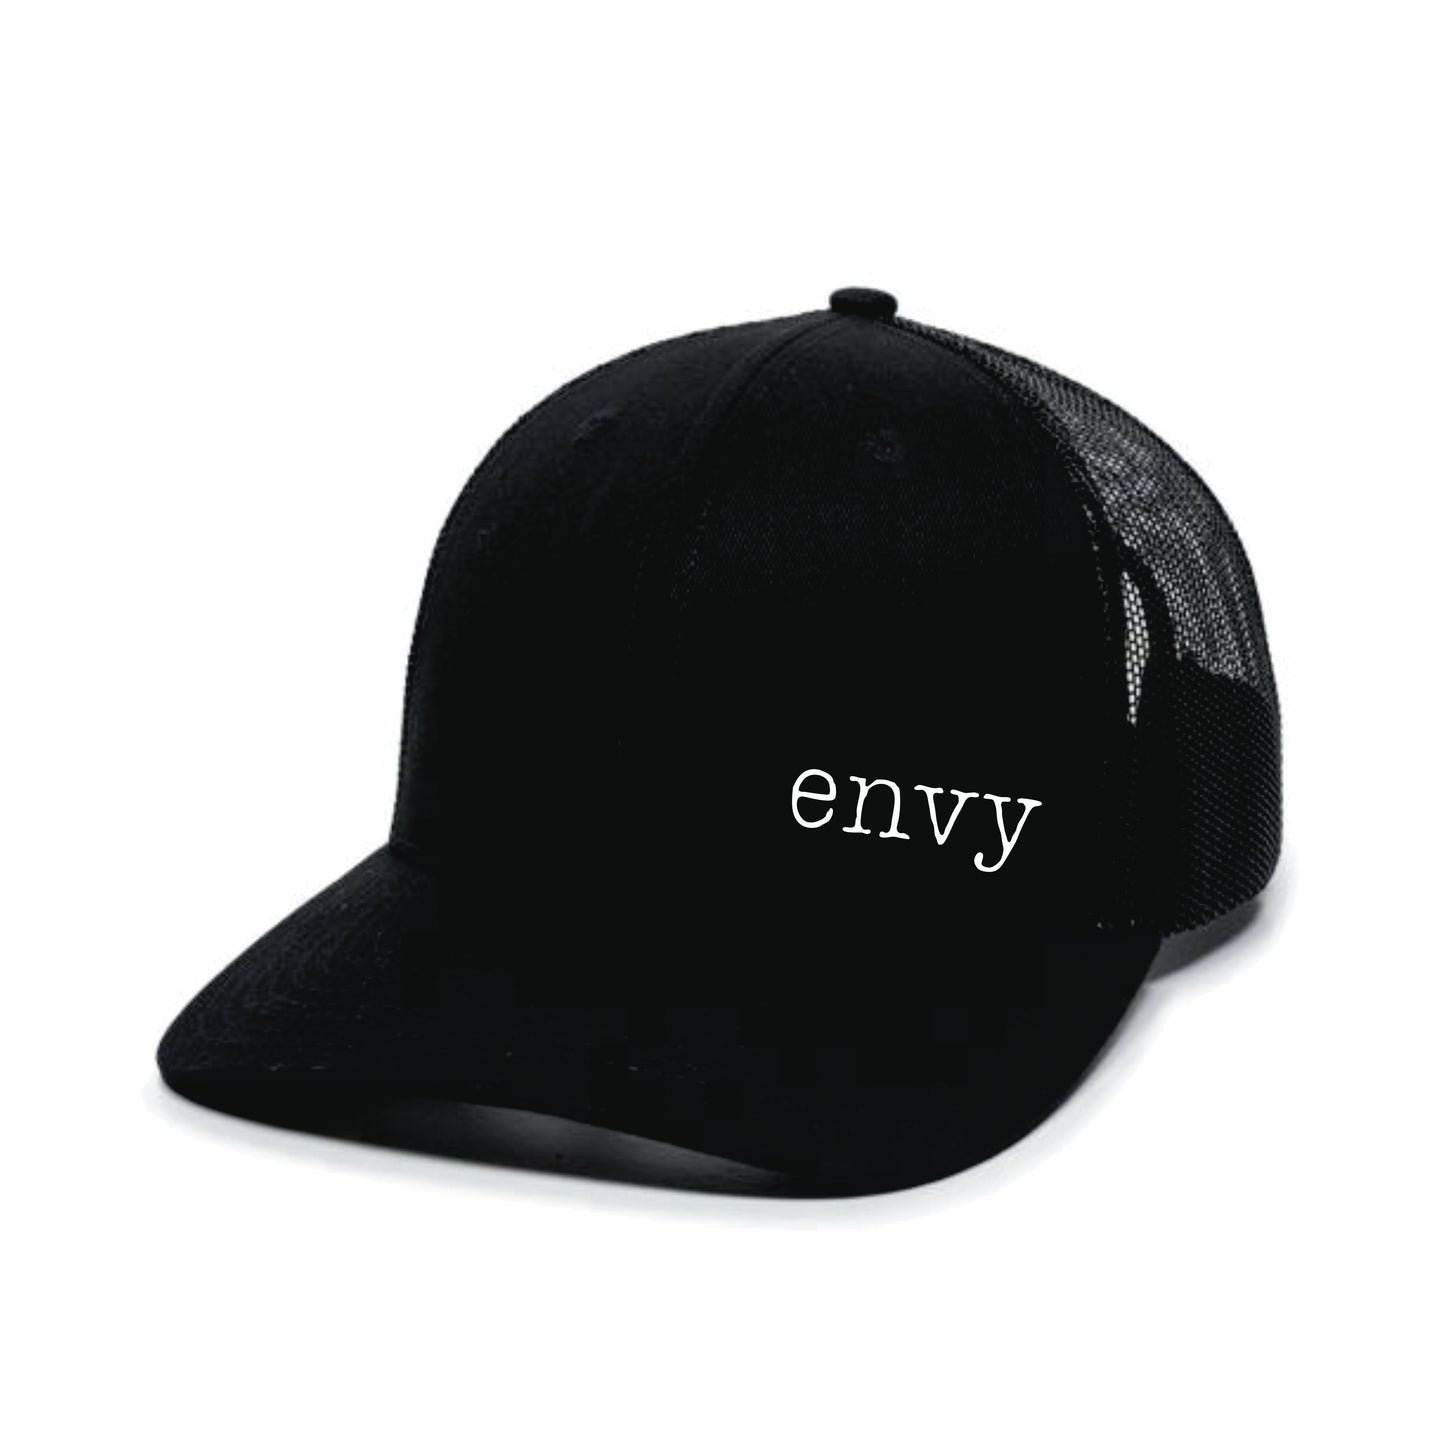 Black Envy Trucker Hat